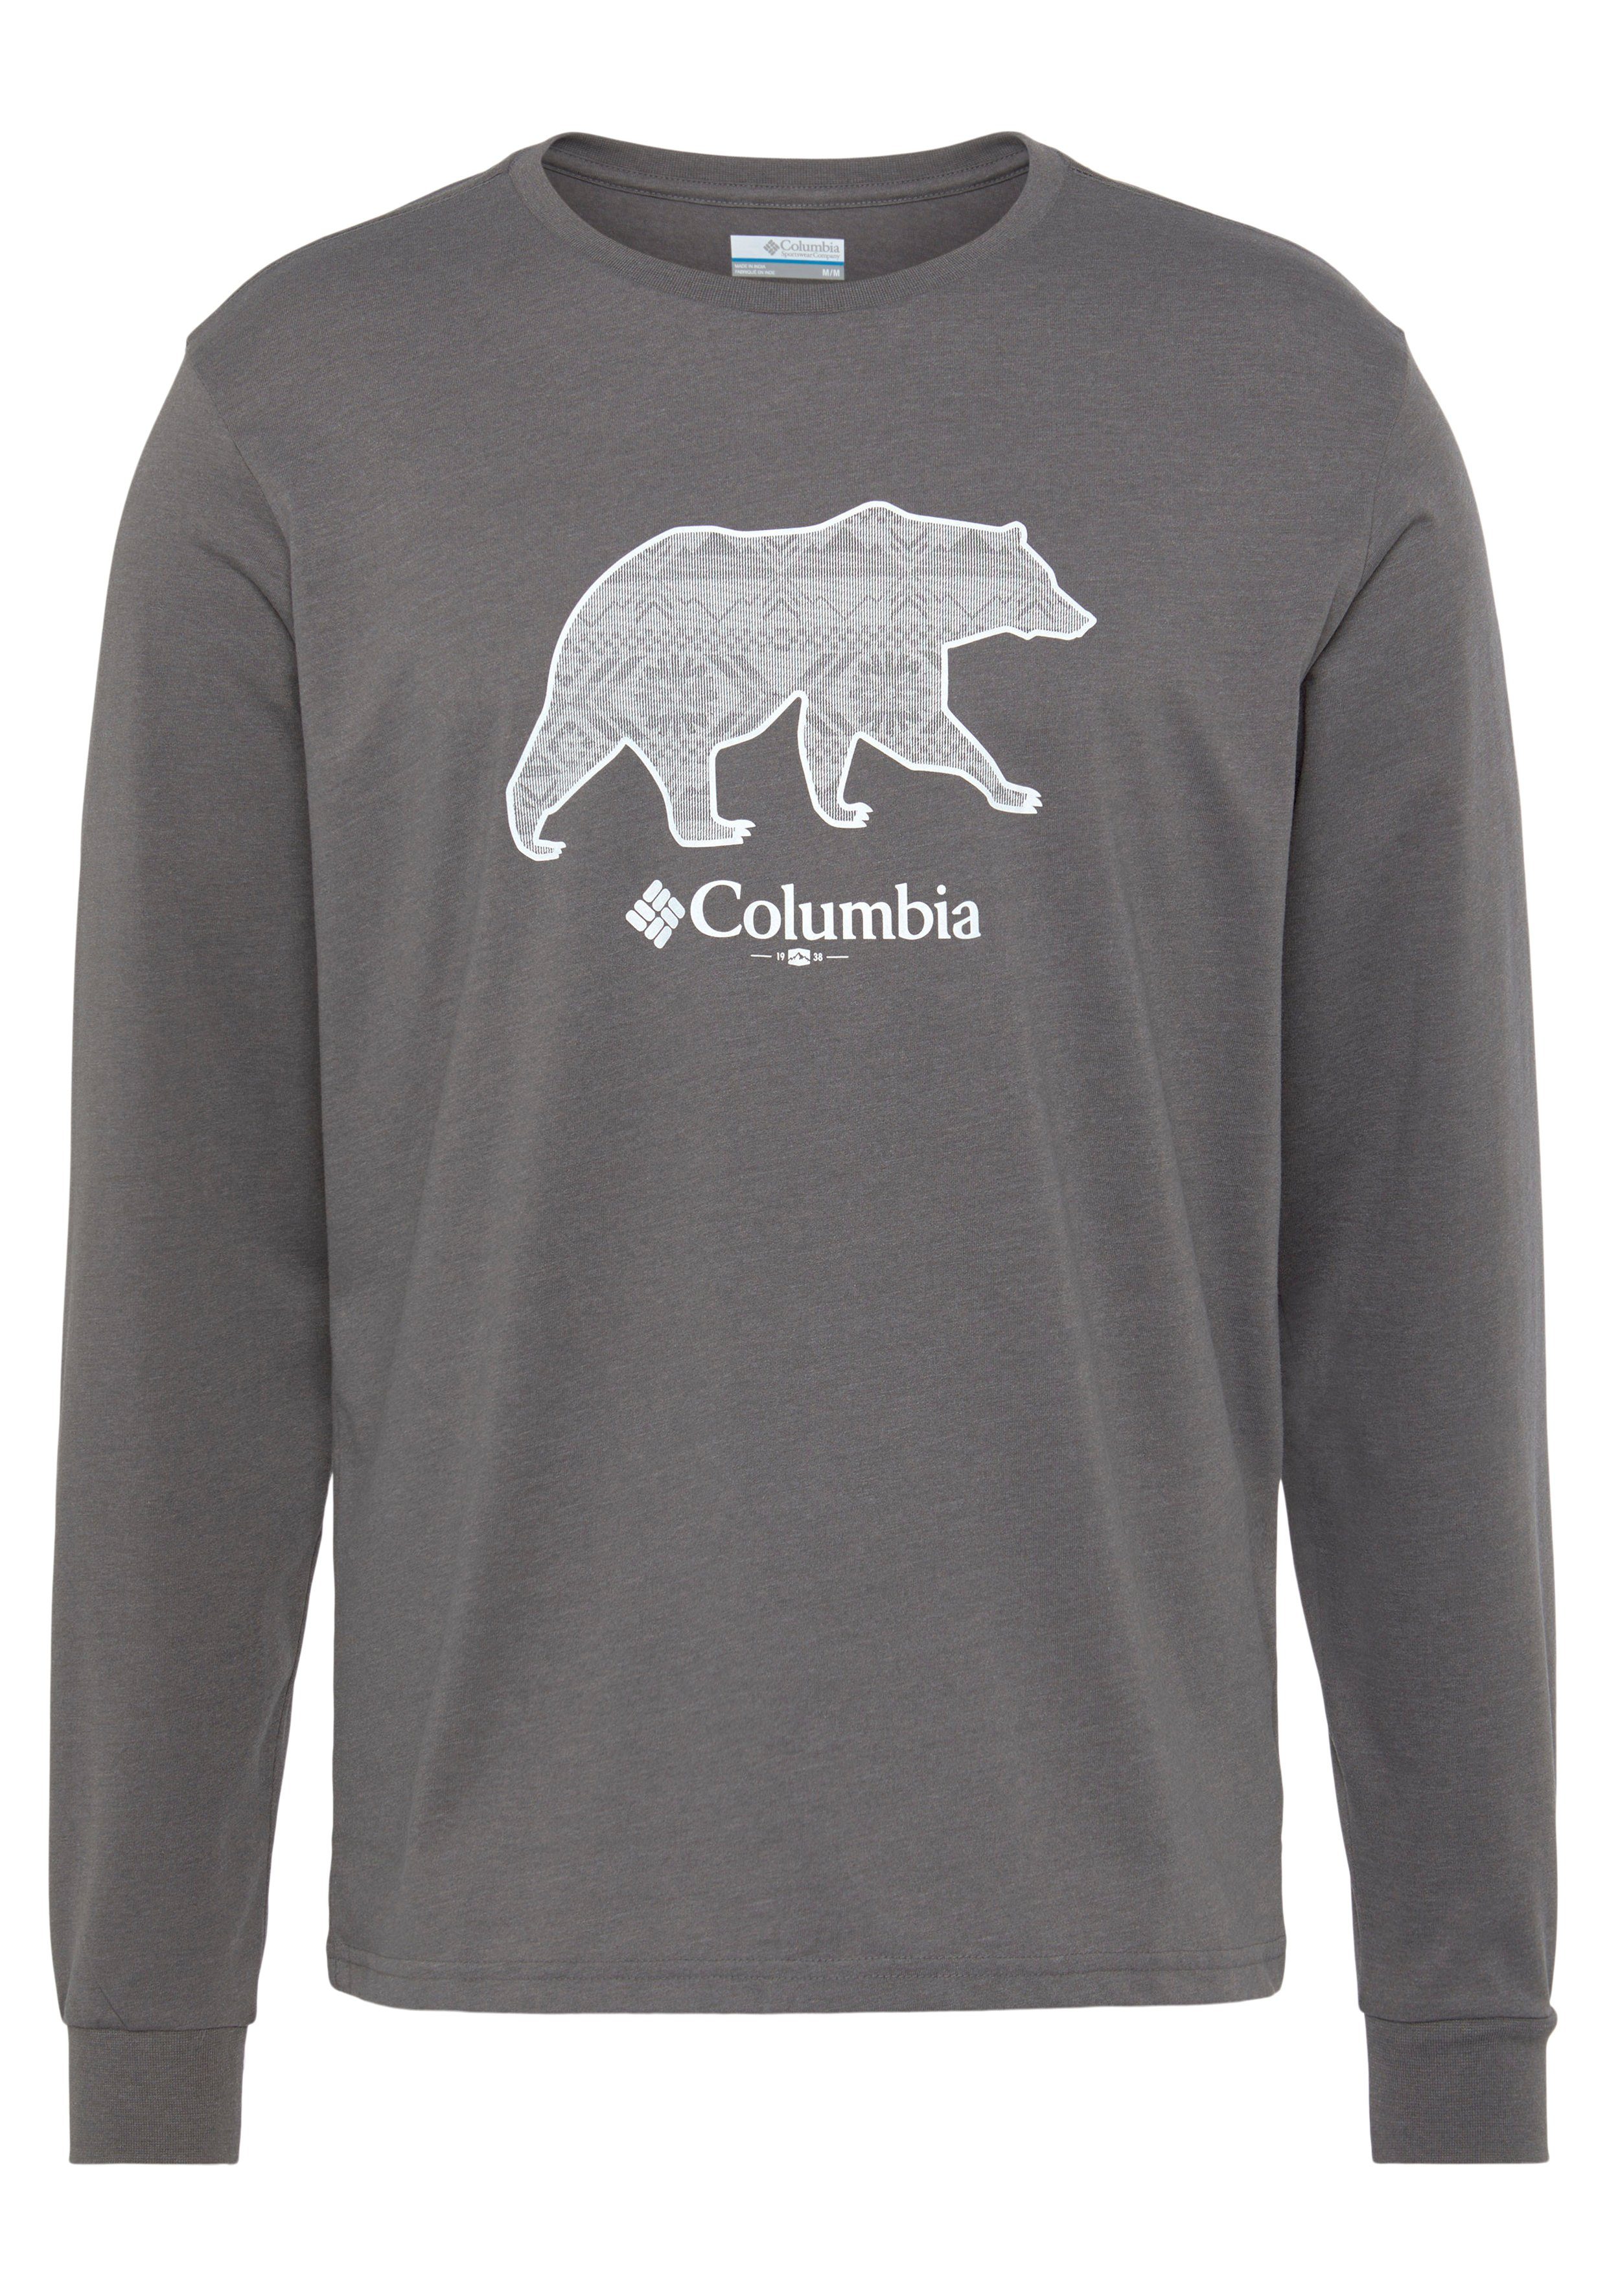 Tee CSC 025 grey Logo LS Seasonal T-Shirt city Columbia